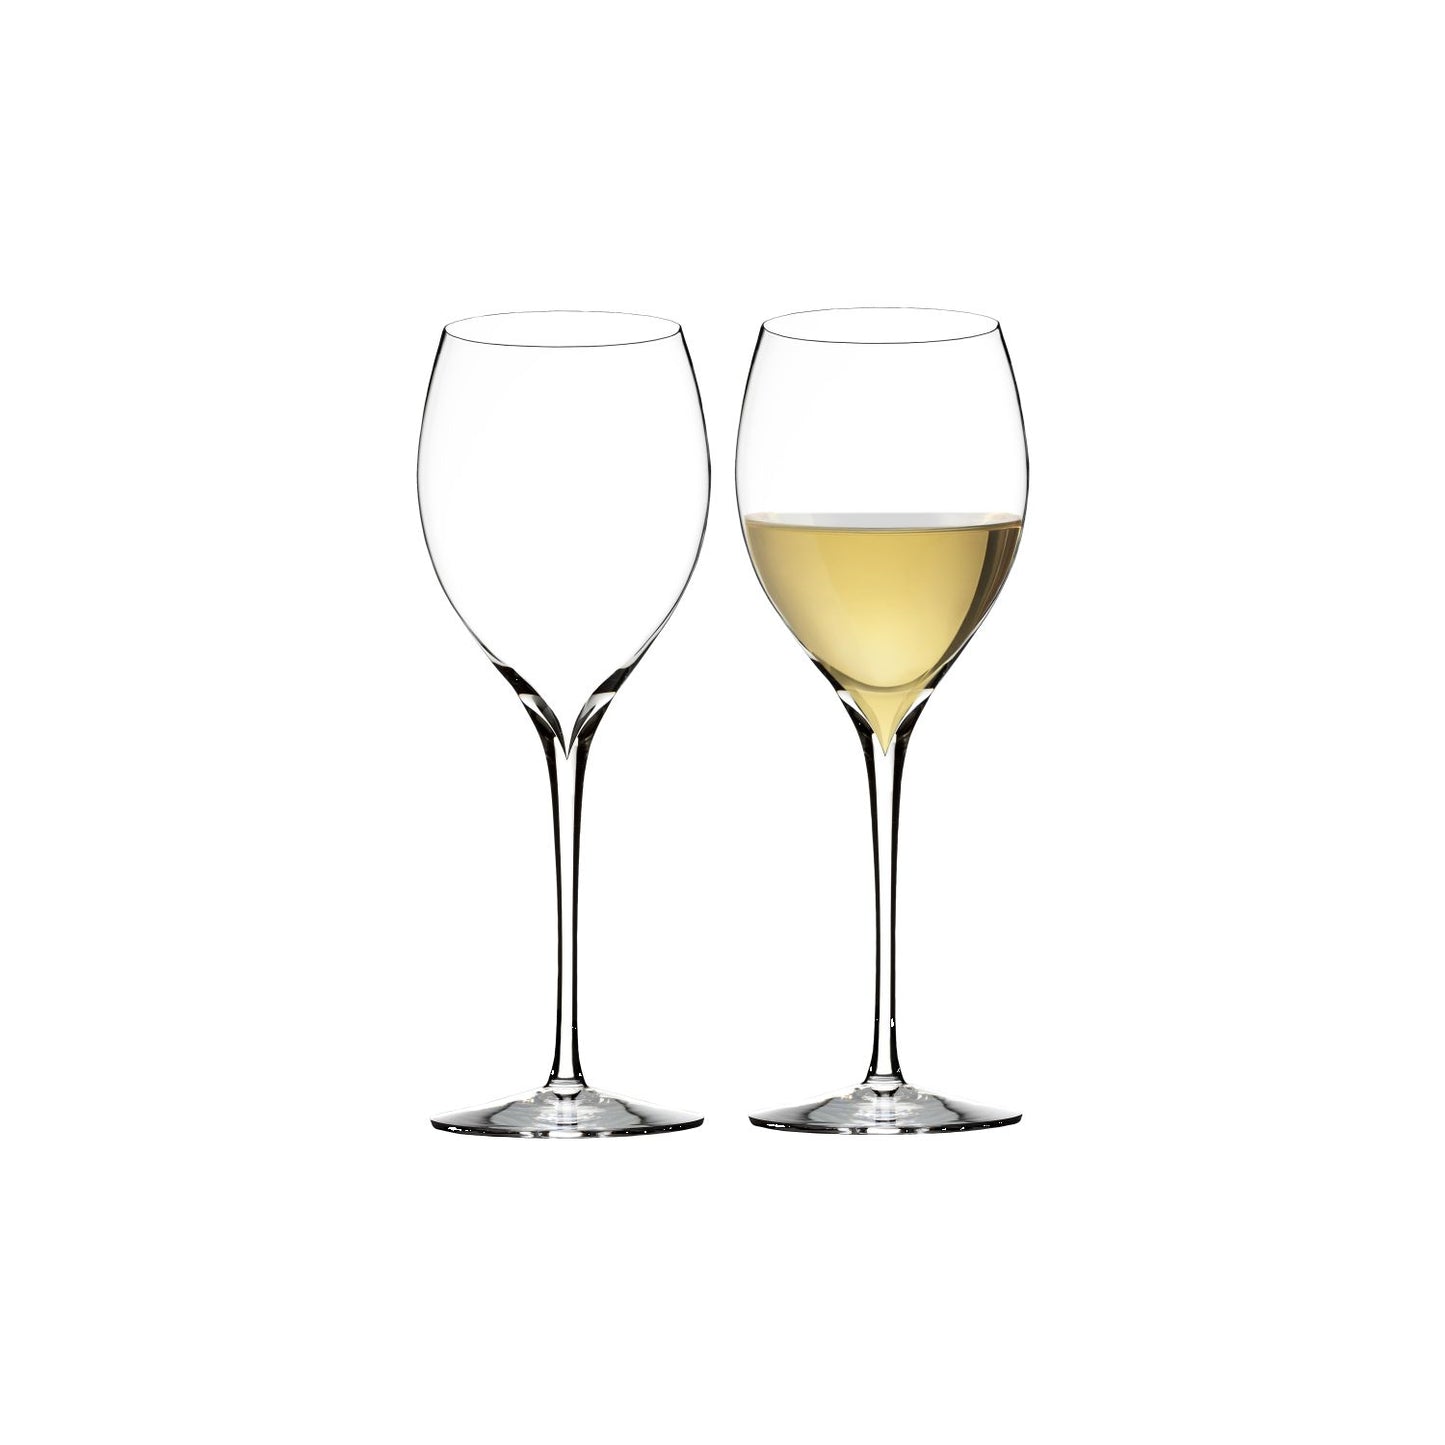 Waterford Elegance Chardonnay 12.5floz, Set of 2